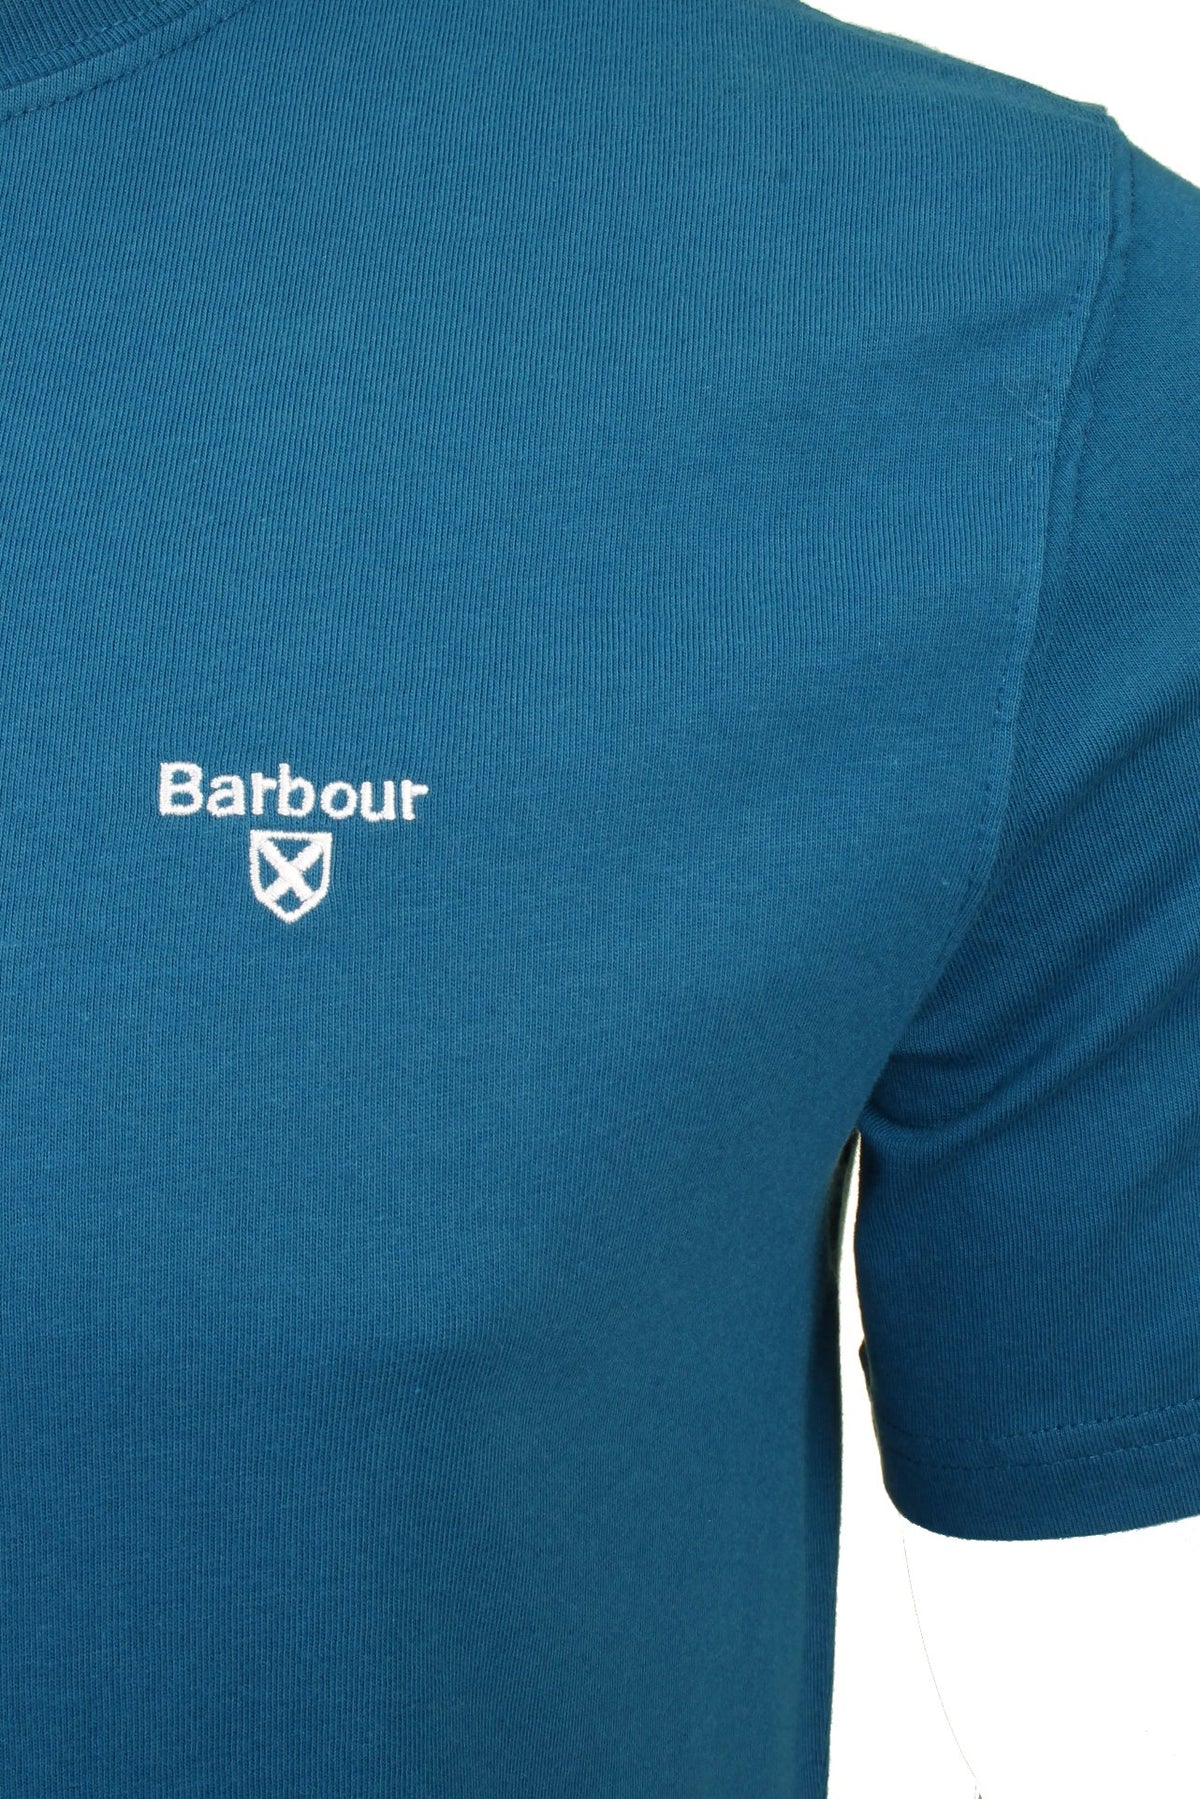 Barbour Men's Sports T-Shirt - Short Sleeved, 02, Mts0331, Lyons Blue